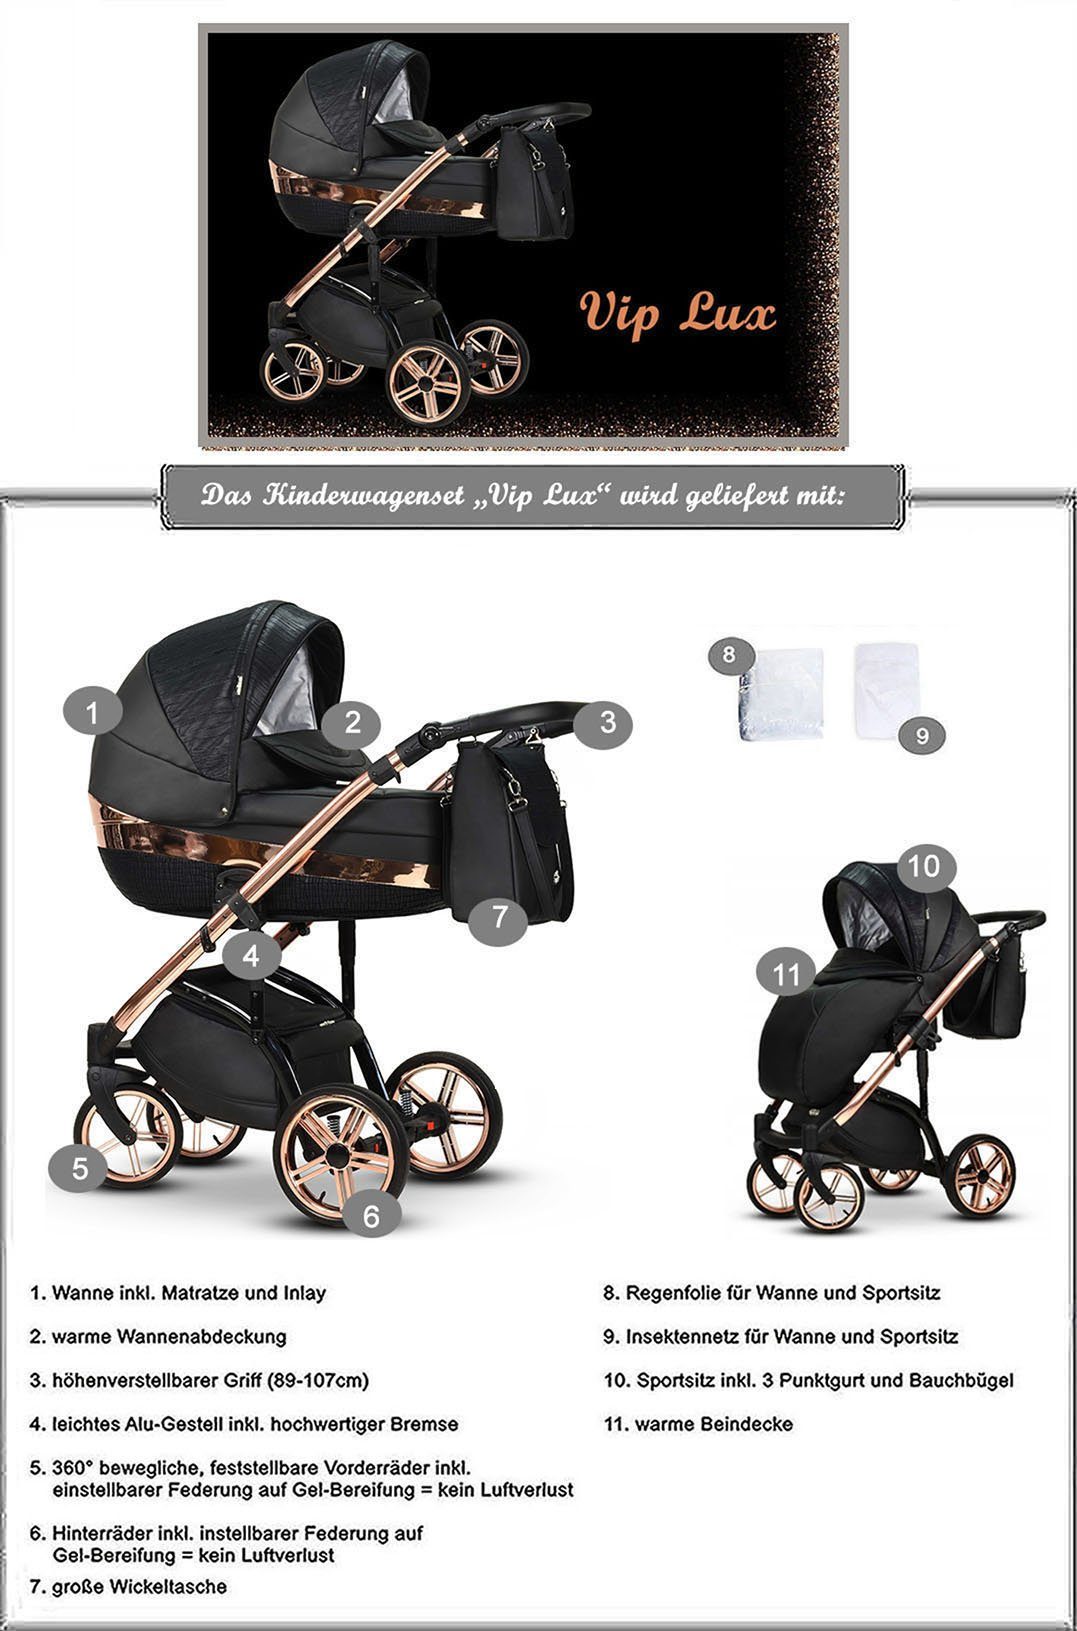 babies-on-wheels Kombi-Kinderwagen 2 Farben 1 Silber-Gold-Dekor 16 Lux Kinderwagen-Set - Teile in - 11 Vip in